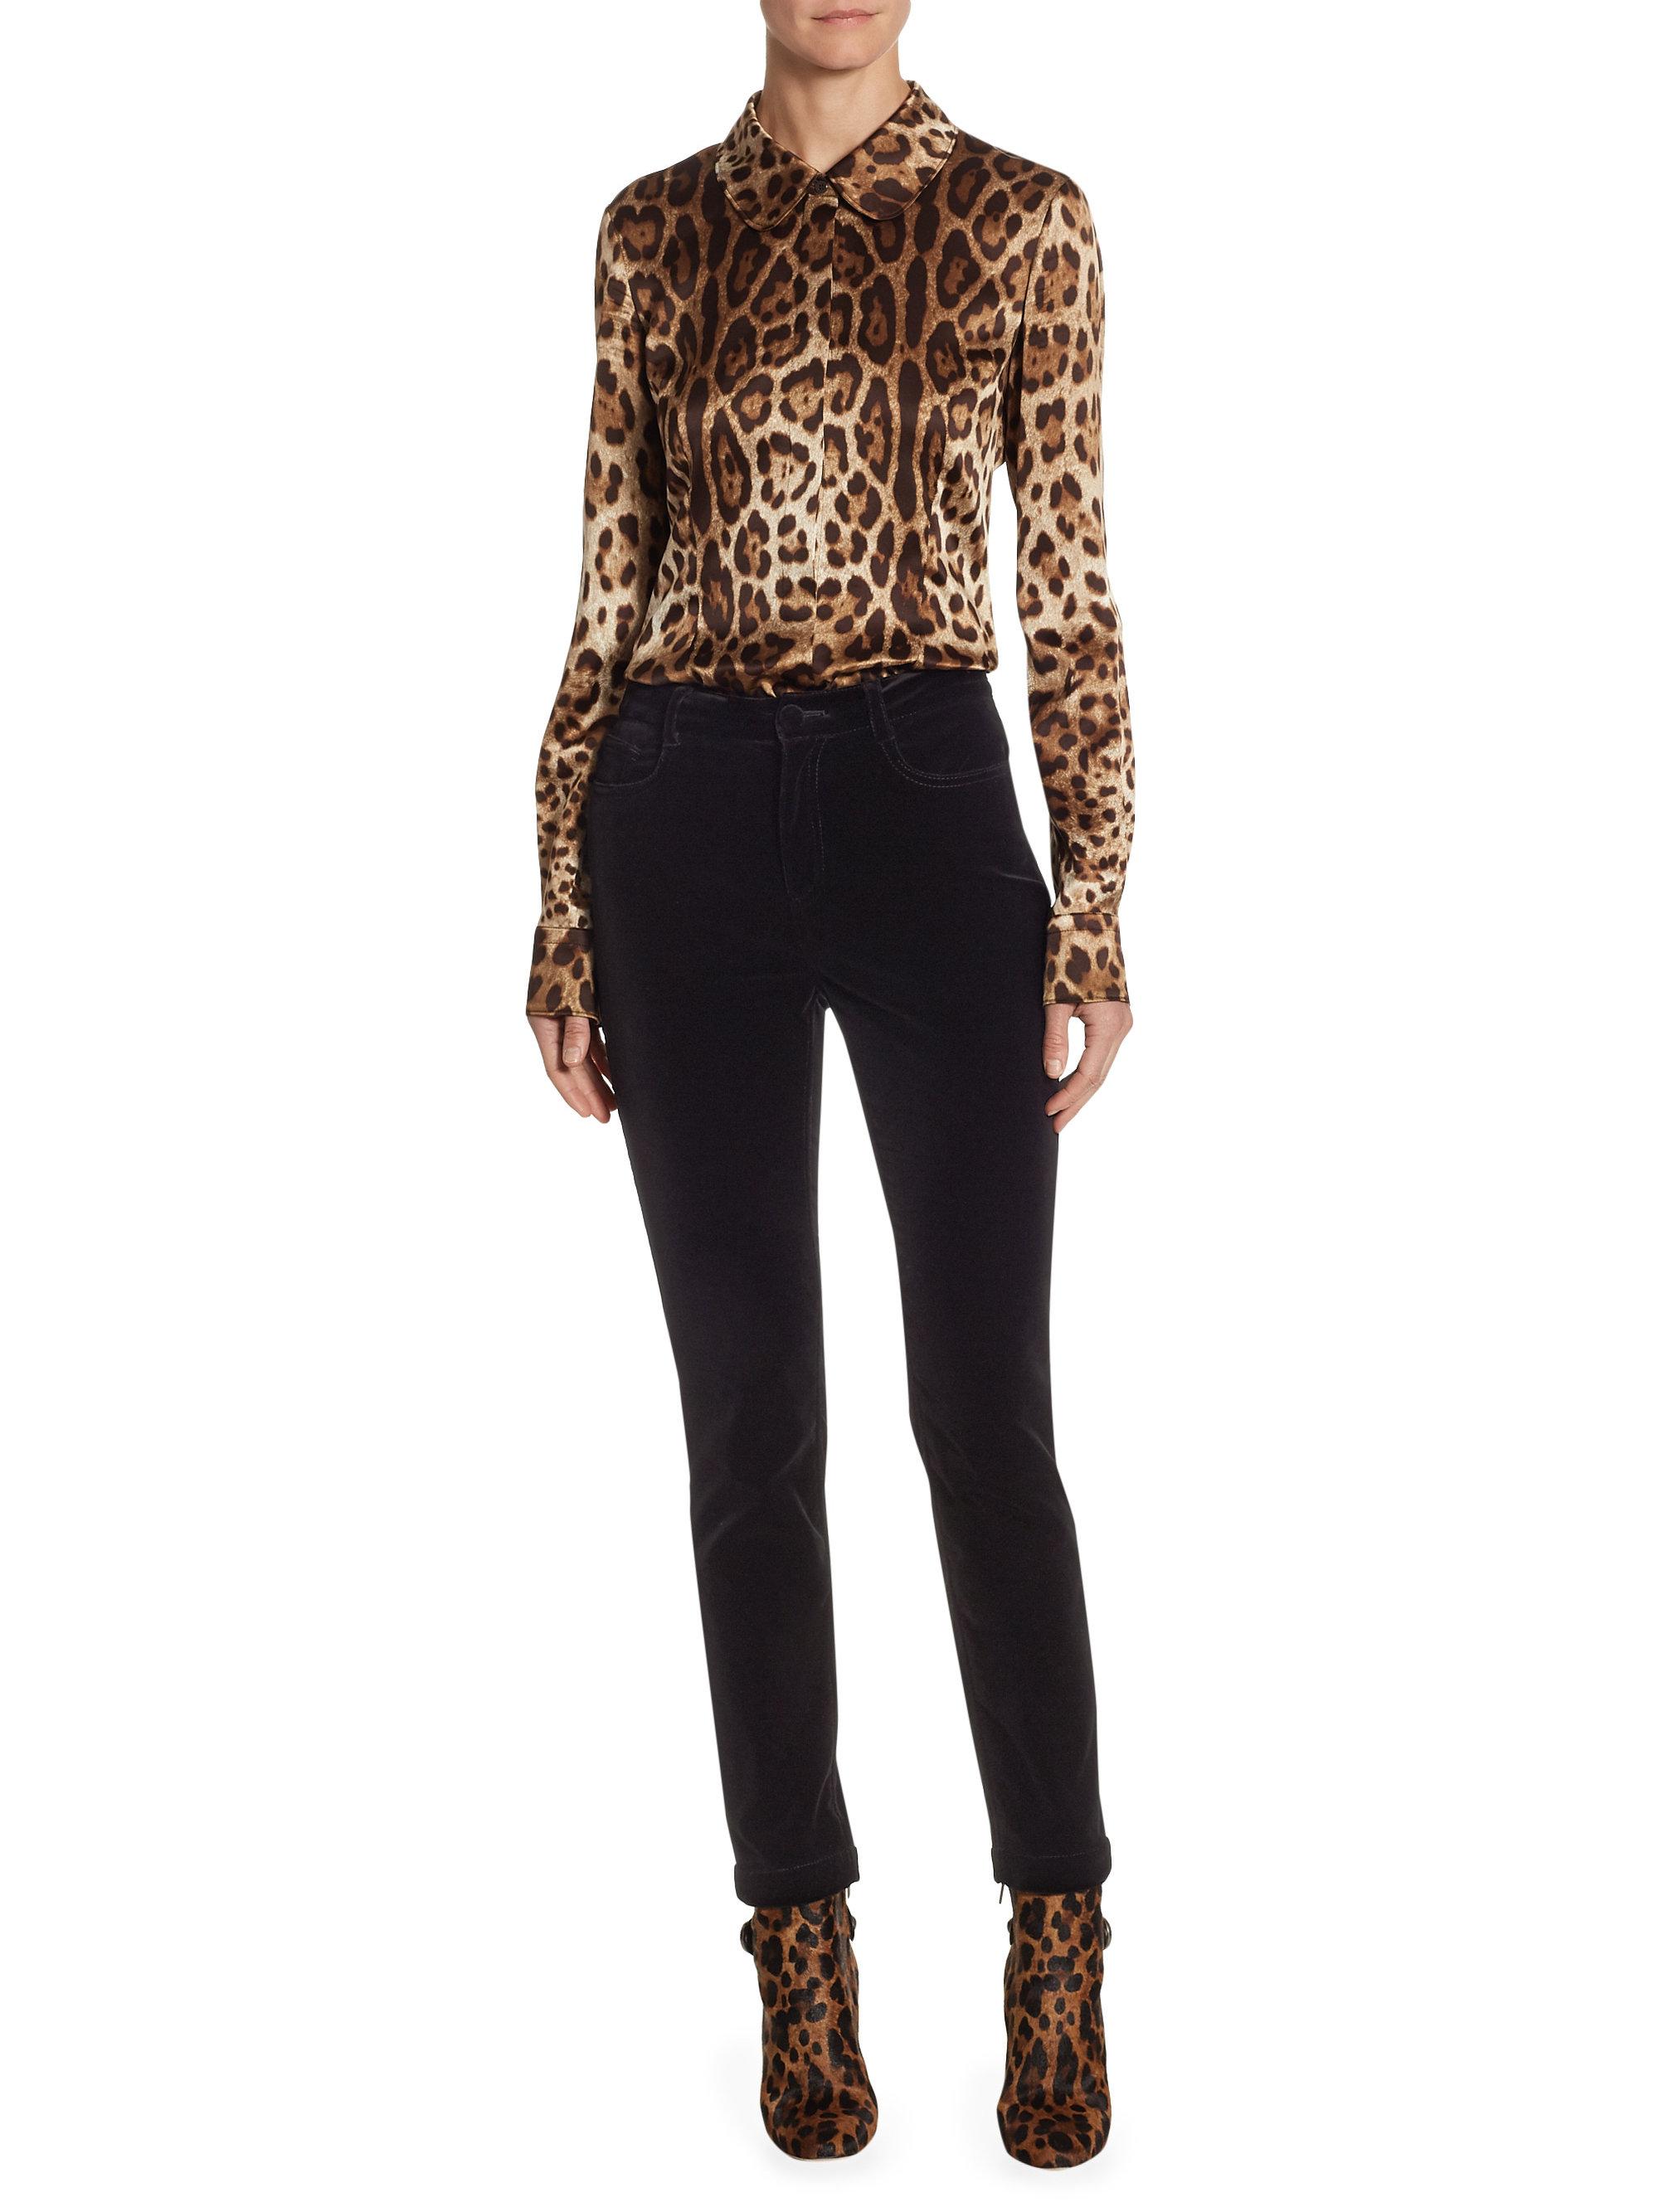 Dolce & Gabbana Leopard Print Blouse